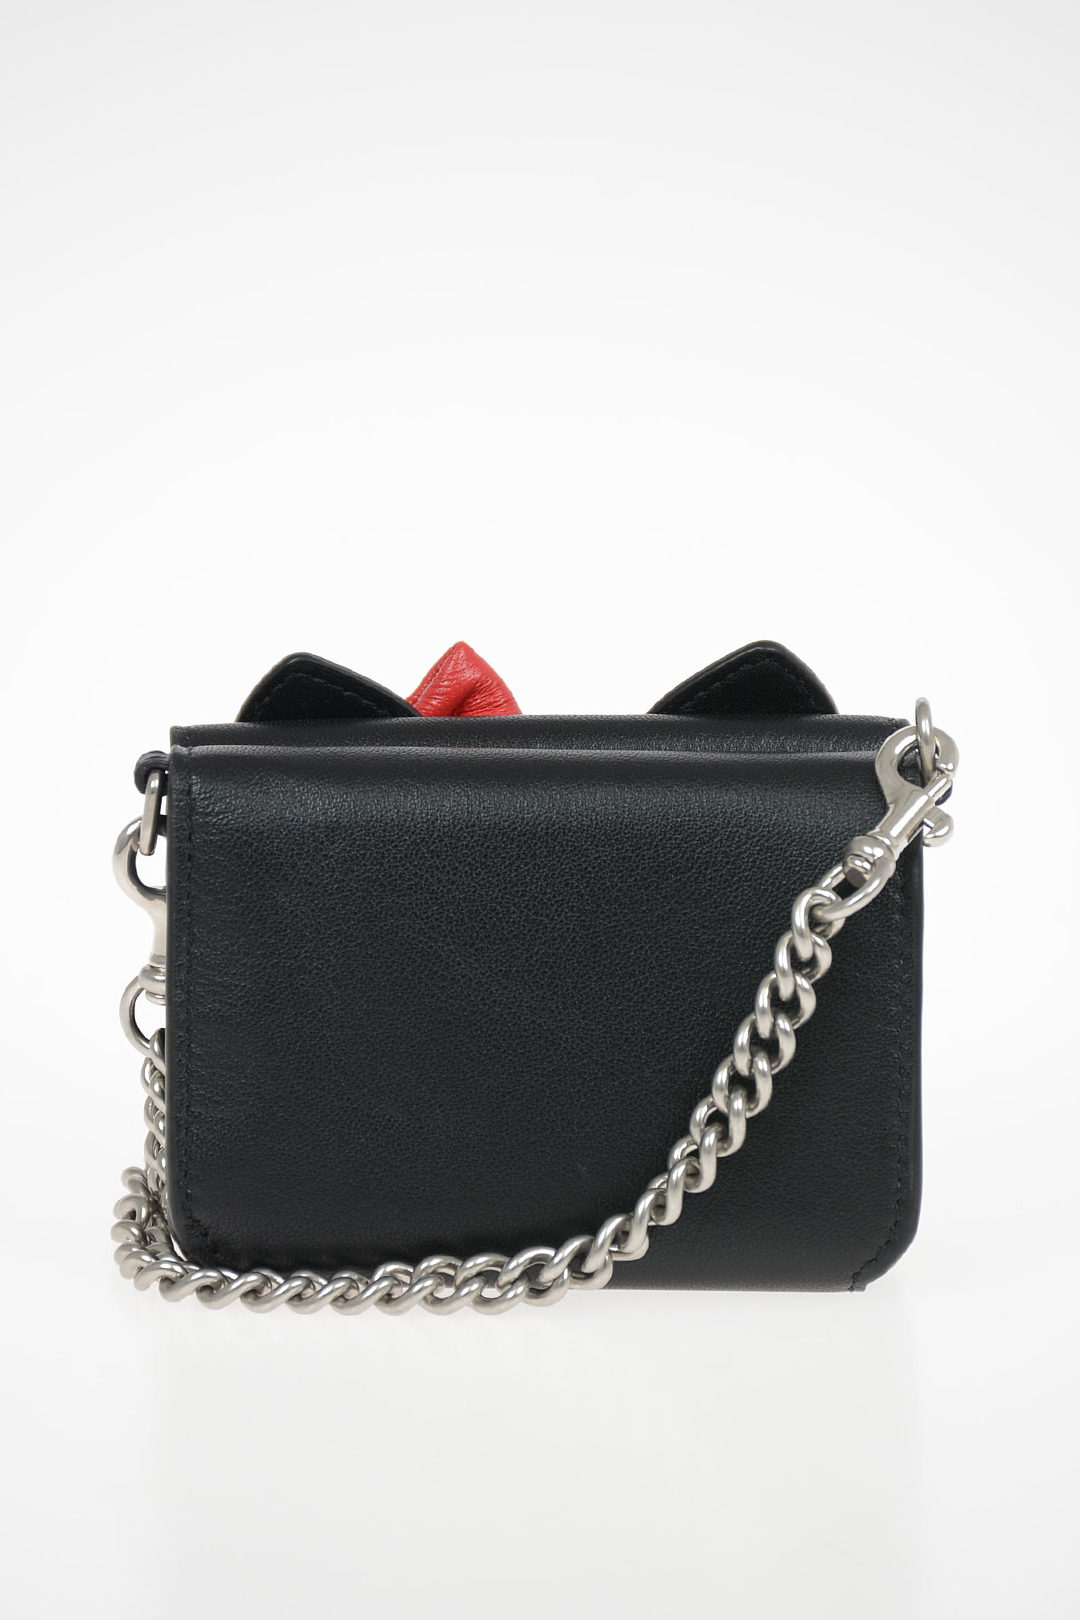 Hello Kitty Wallet with spoon shoulder bag black - gaiten